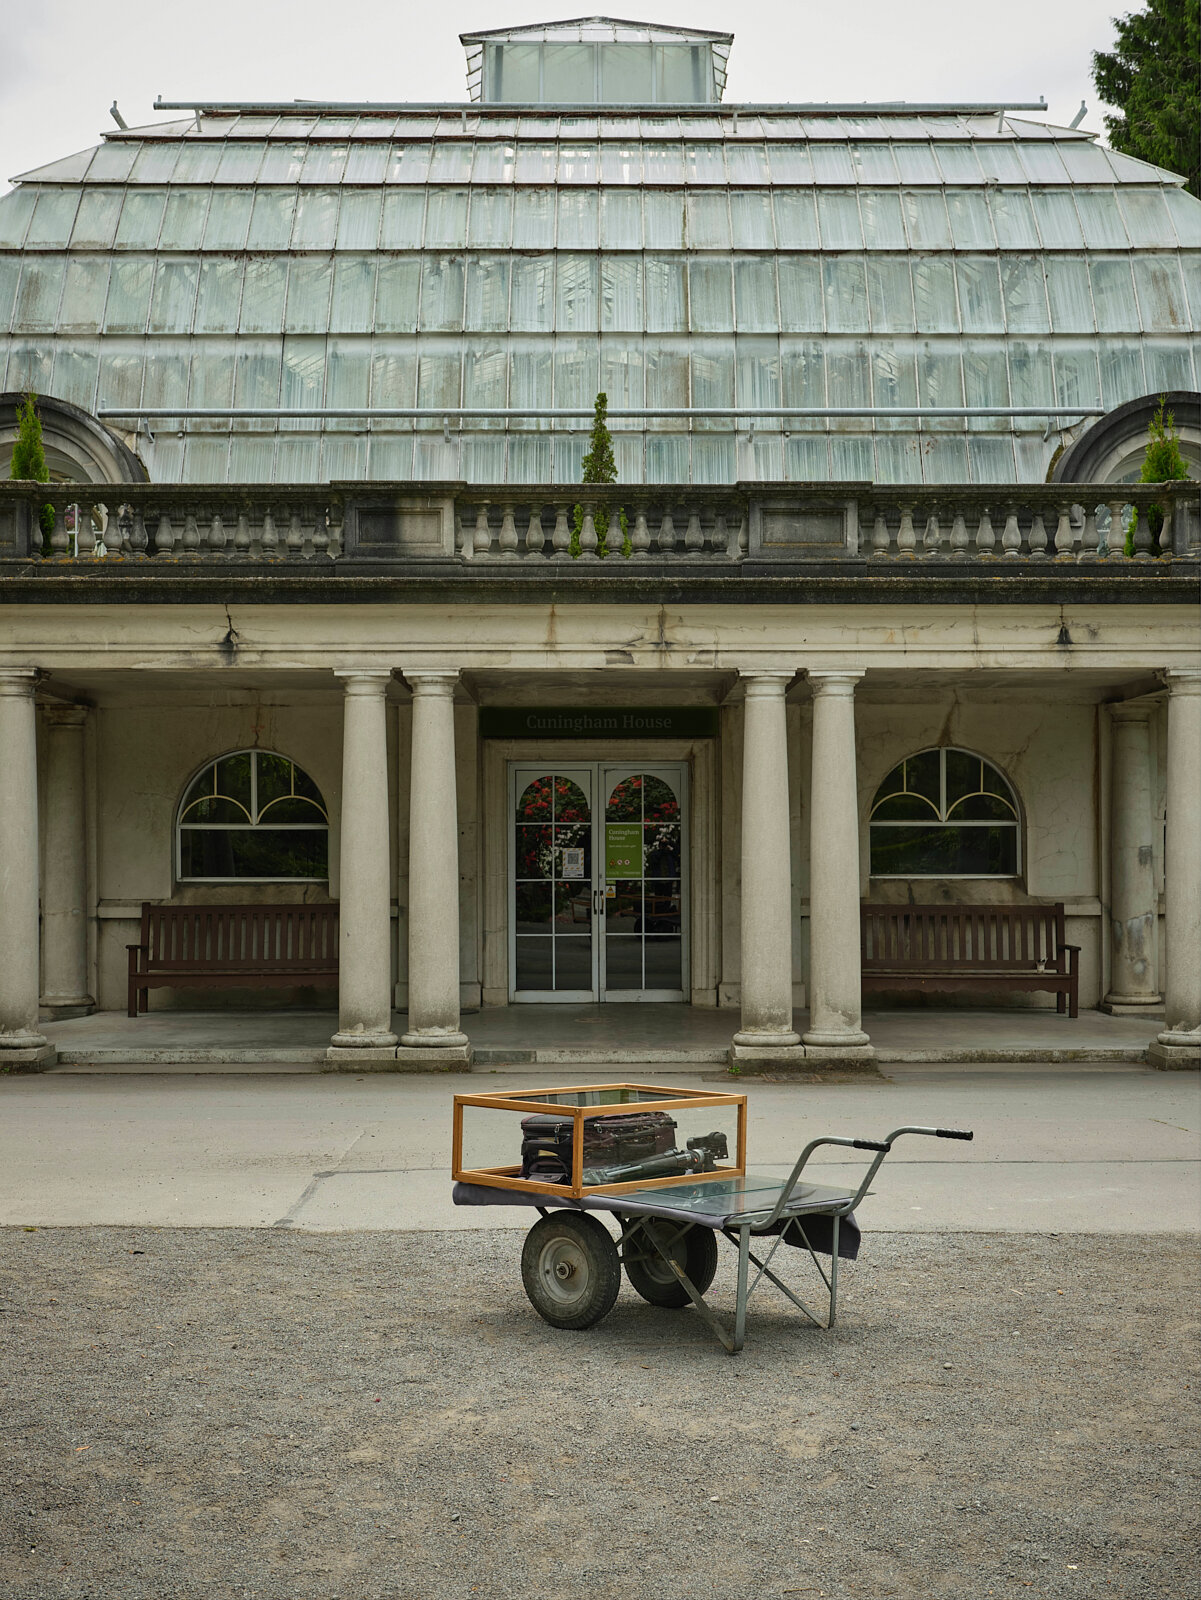   Cunningham House, Christchurch Botanic Gardens. 2020  1080 x 830mm.  